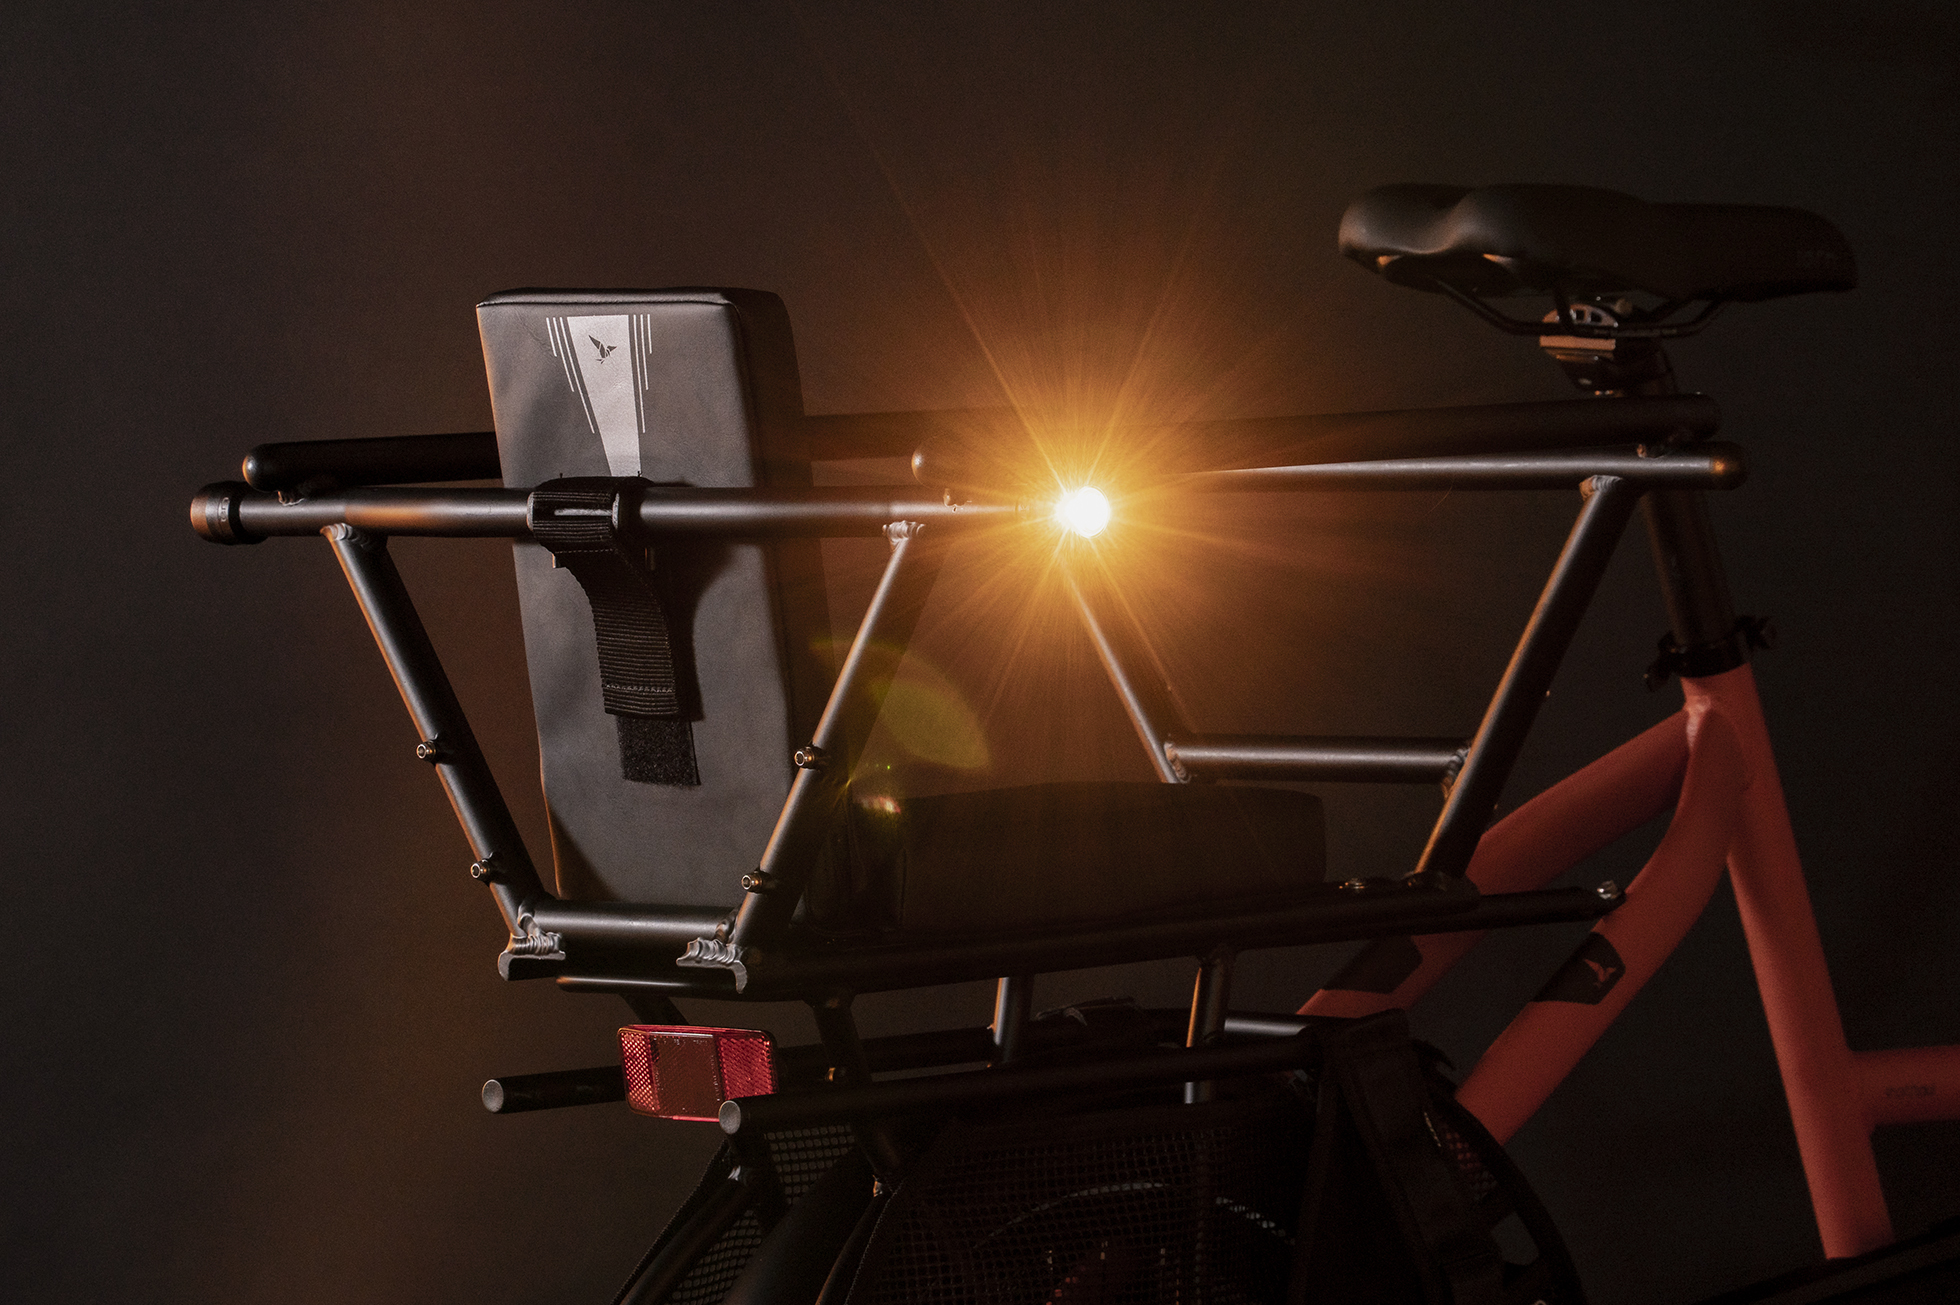 Amber LED bar end lights for bike at night